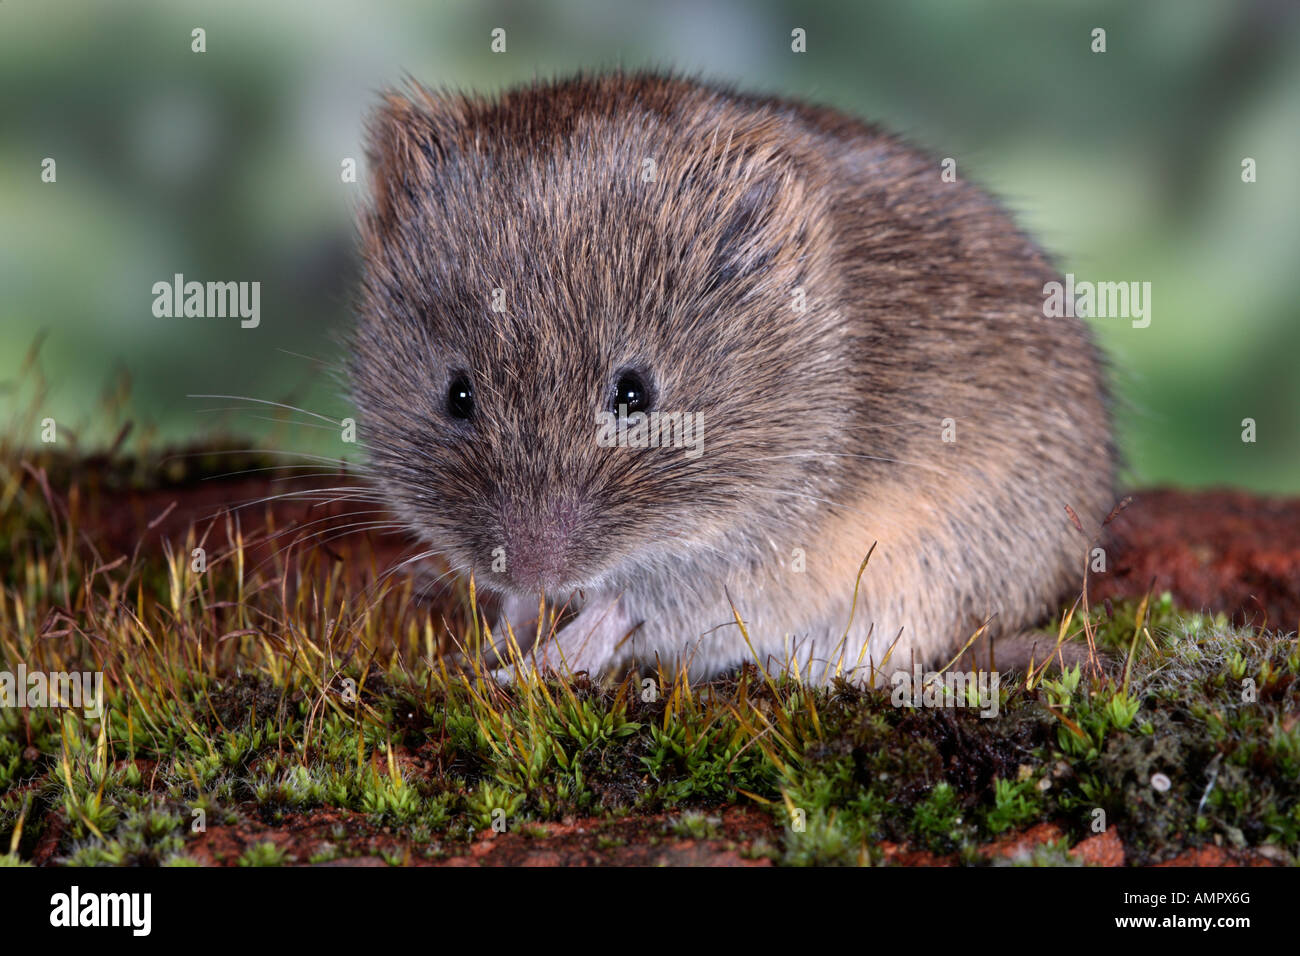 https://c8.alamy.com/comp/AMPX6G/short-tailed-vole-microtus-agrestis-sitting-looking-alert-potton-bedfordshire-AMPX6G.jpg